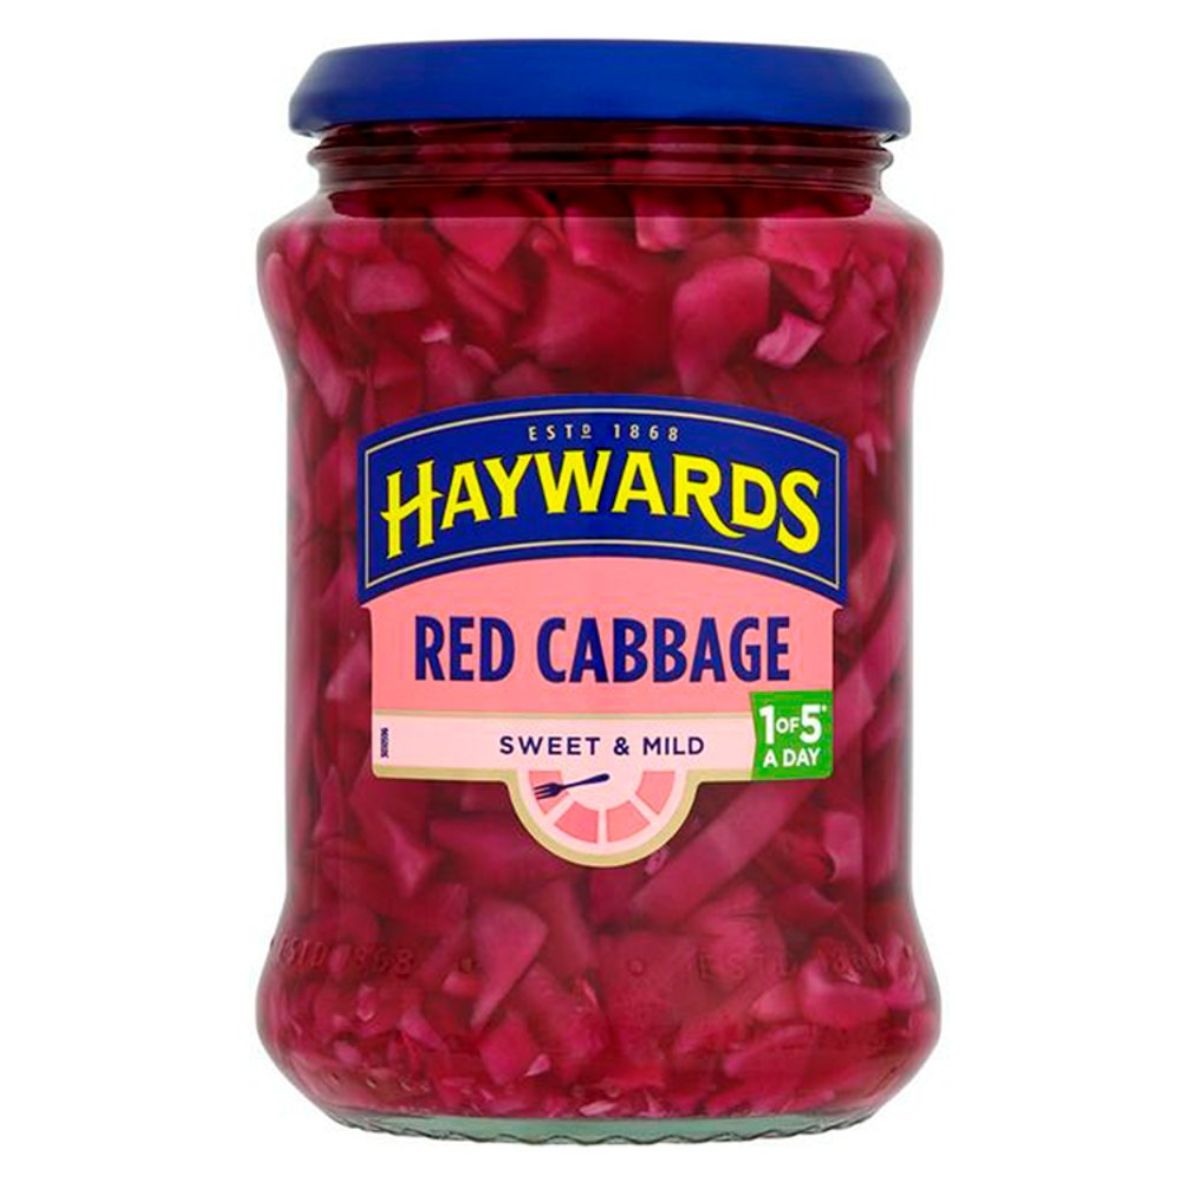 A jar of Haywards - Red Cabbage Sweet & Mild - 400g.